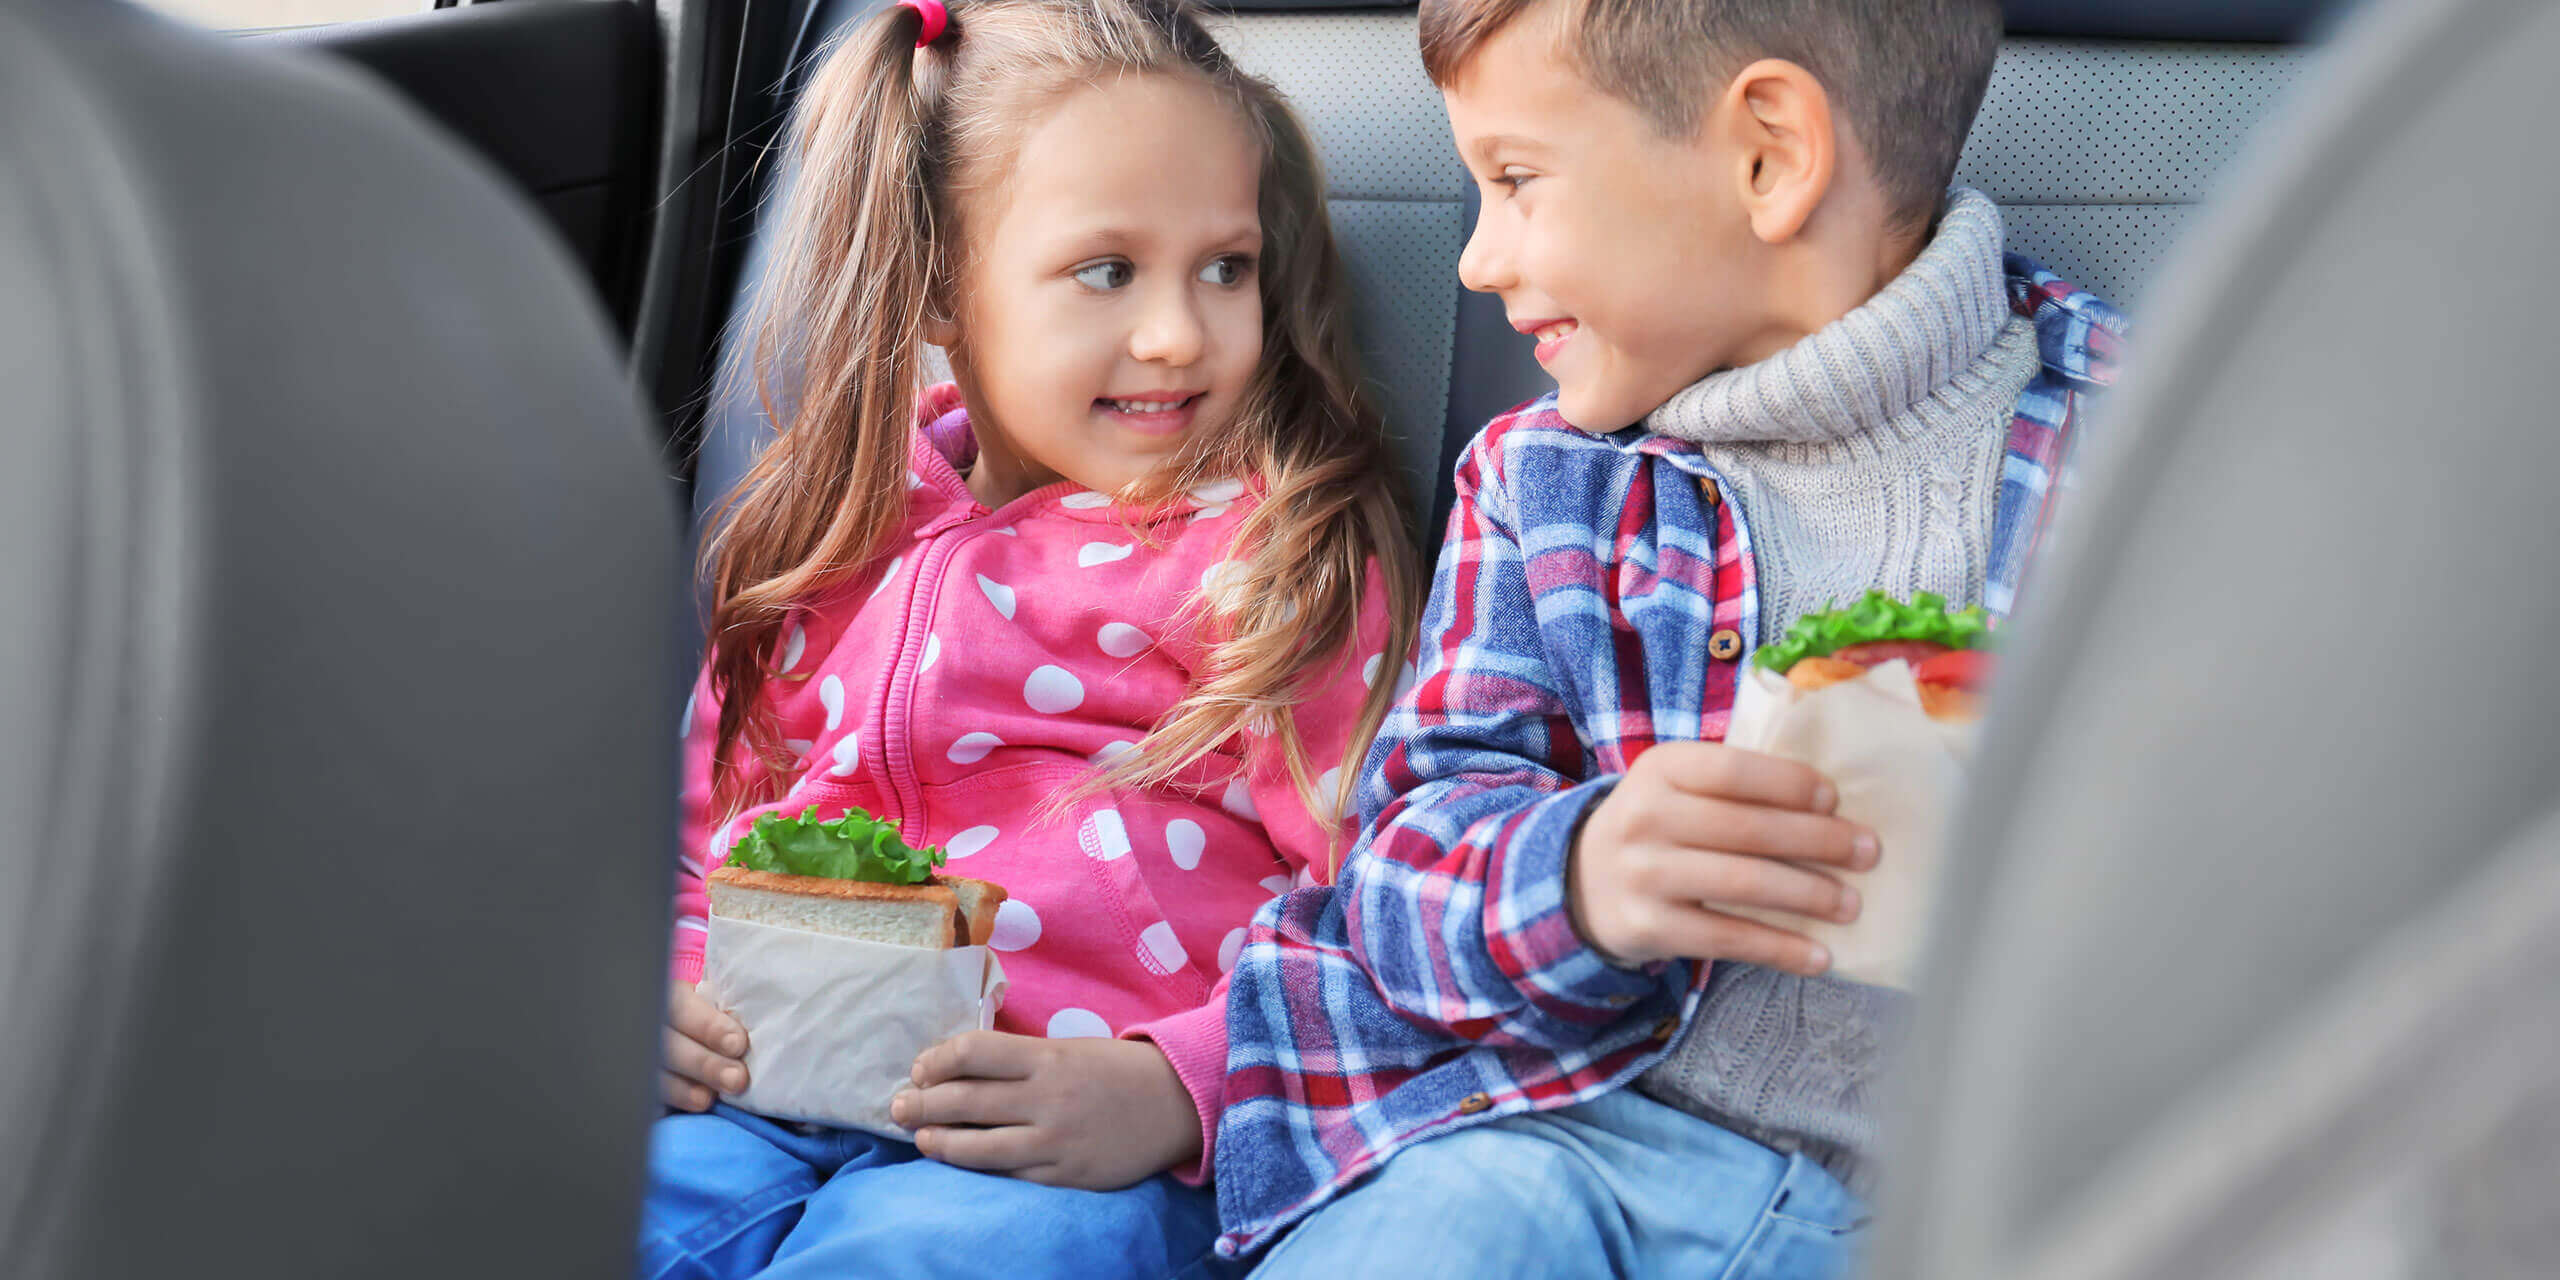 kids eating snacks inside a car